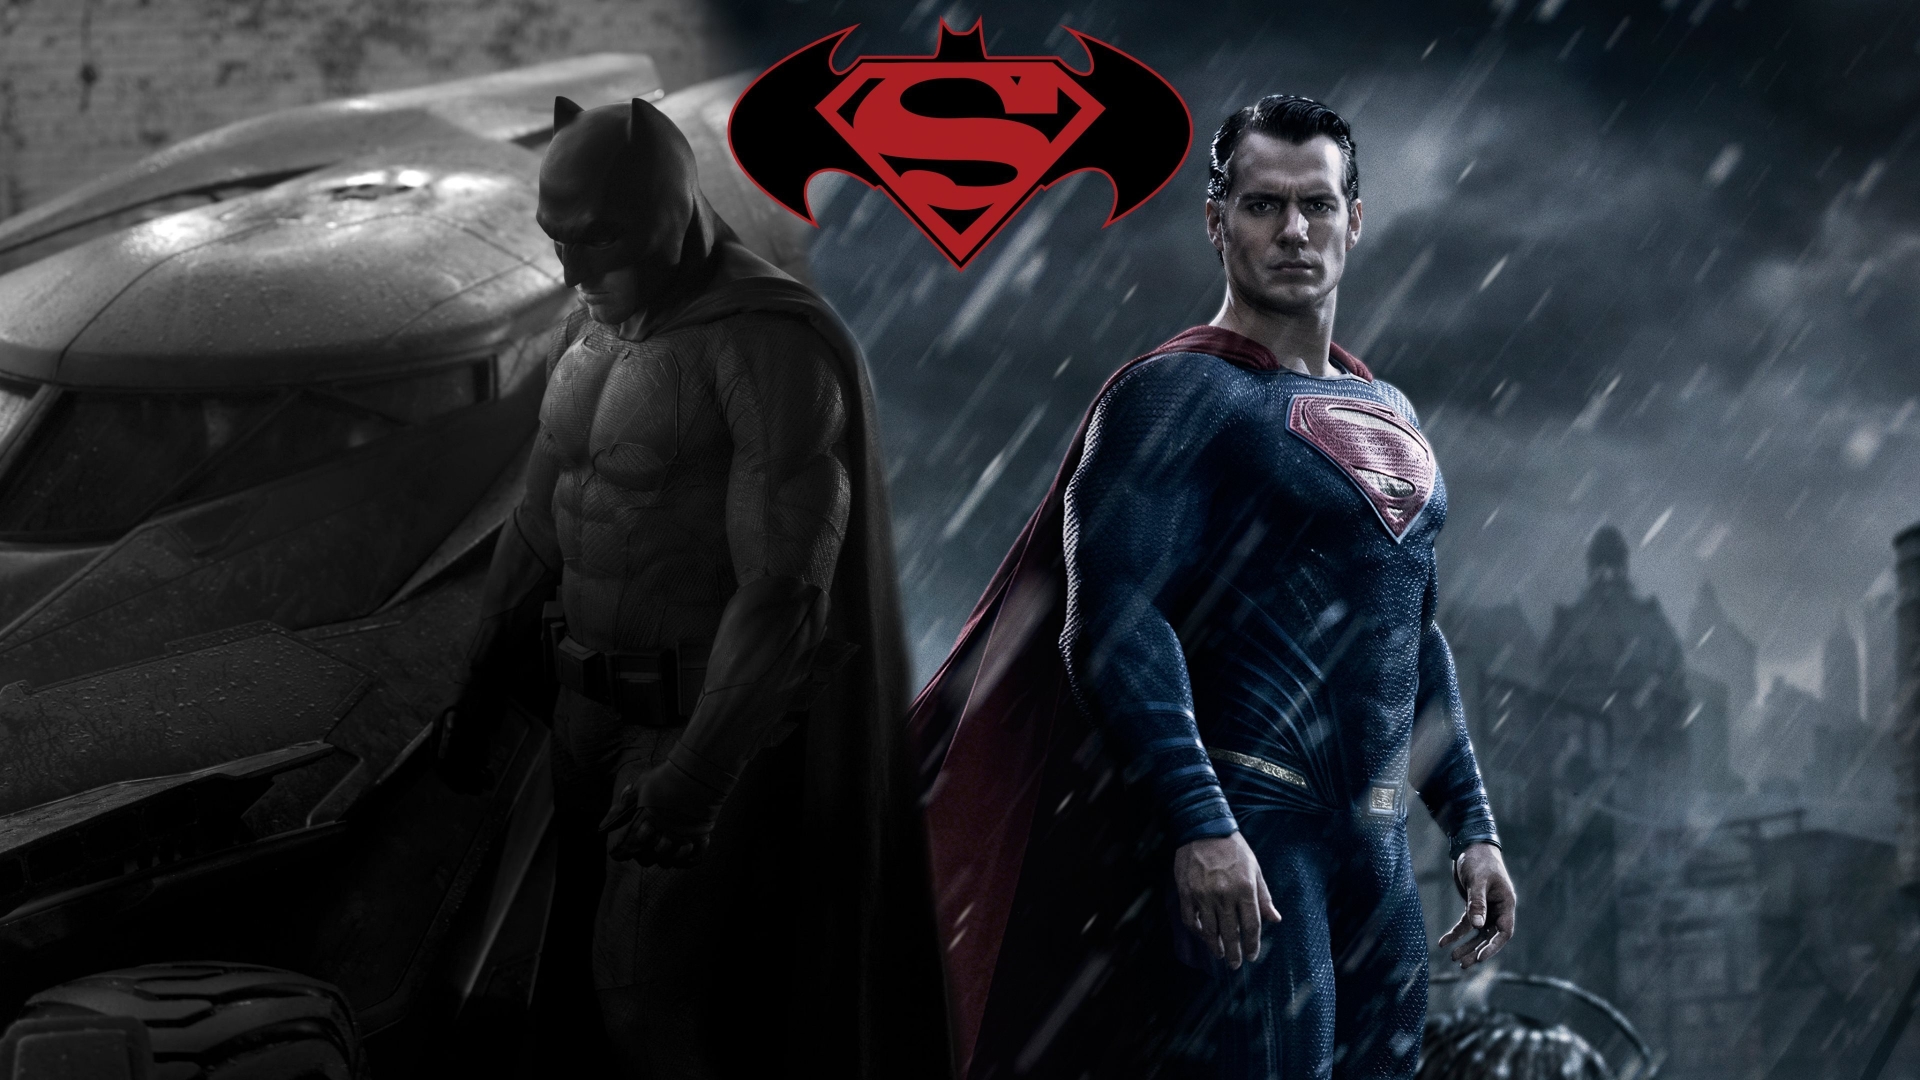 Batman vs Superman Fan Art for 1920 x 1080 HDTV 1080p resolution